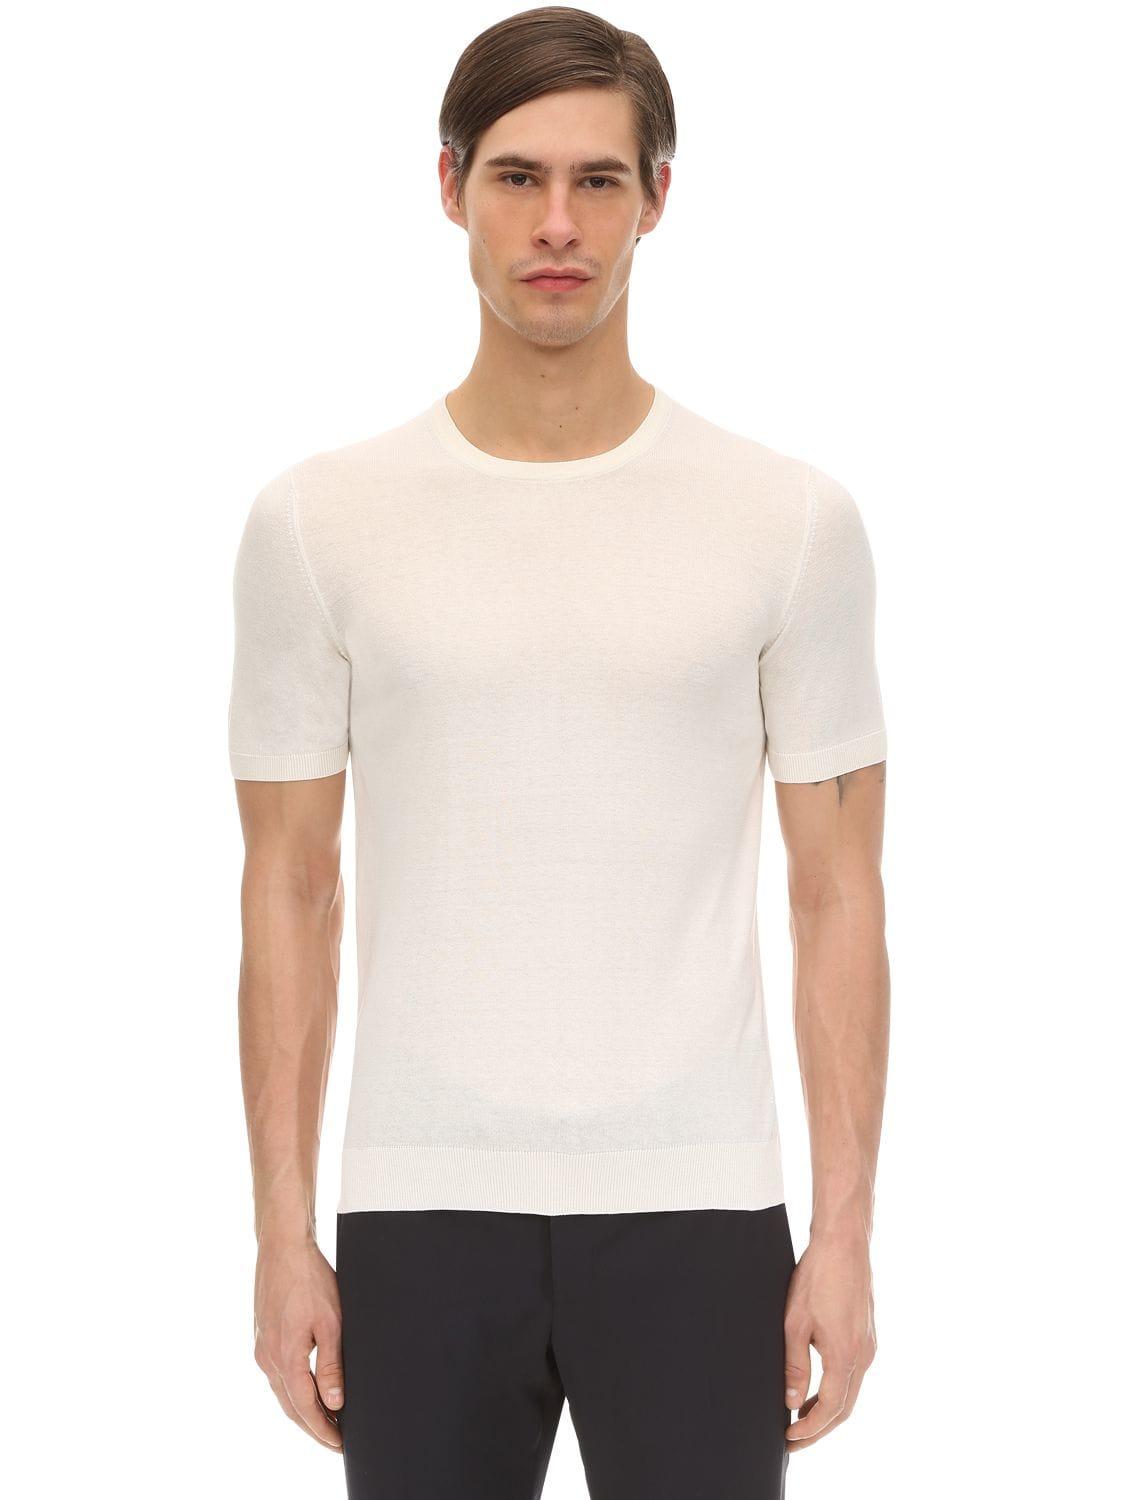 Tagliatore Crewneck Silk T-shirt in White for Men - Lyst